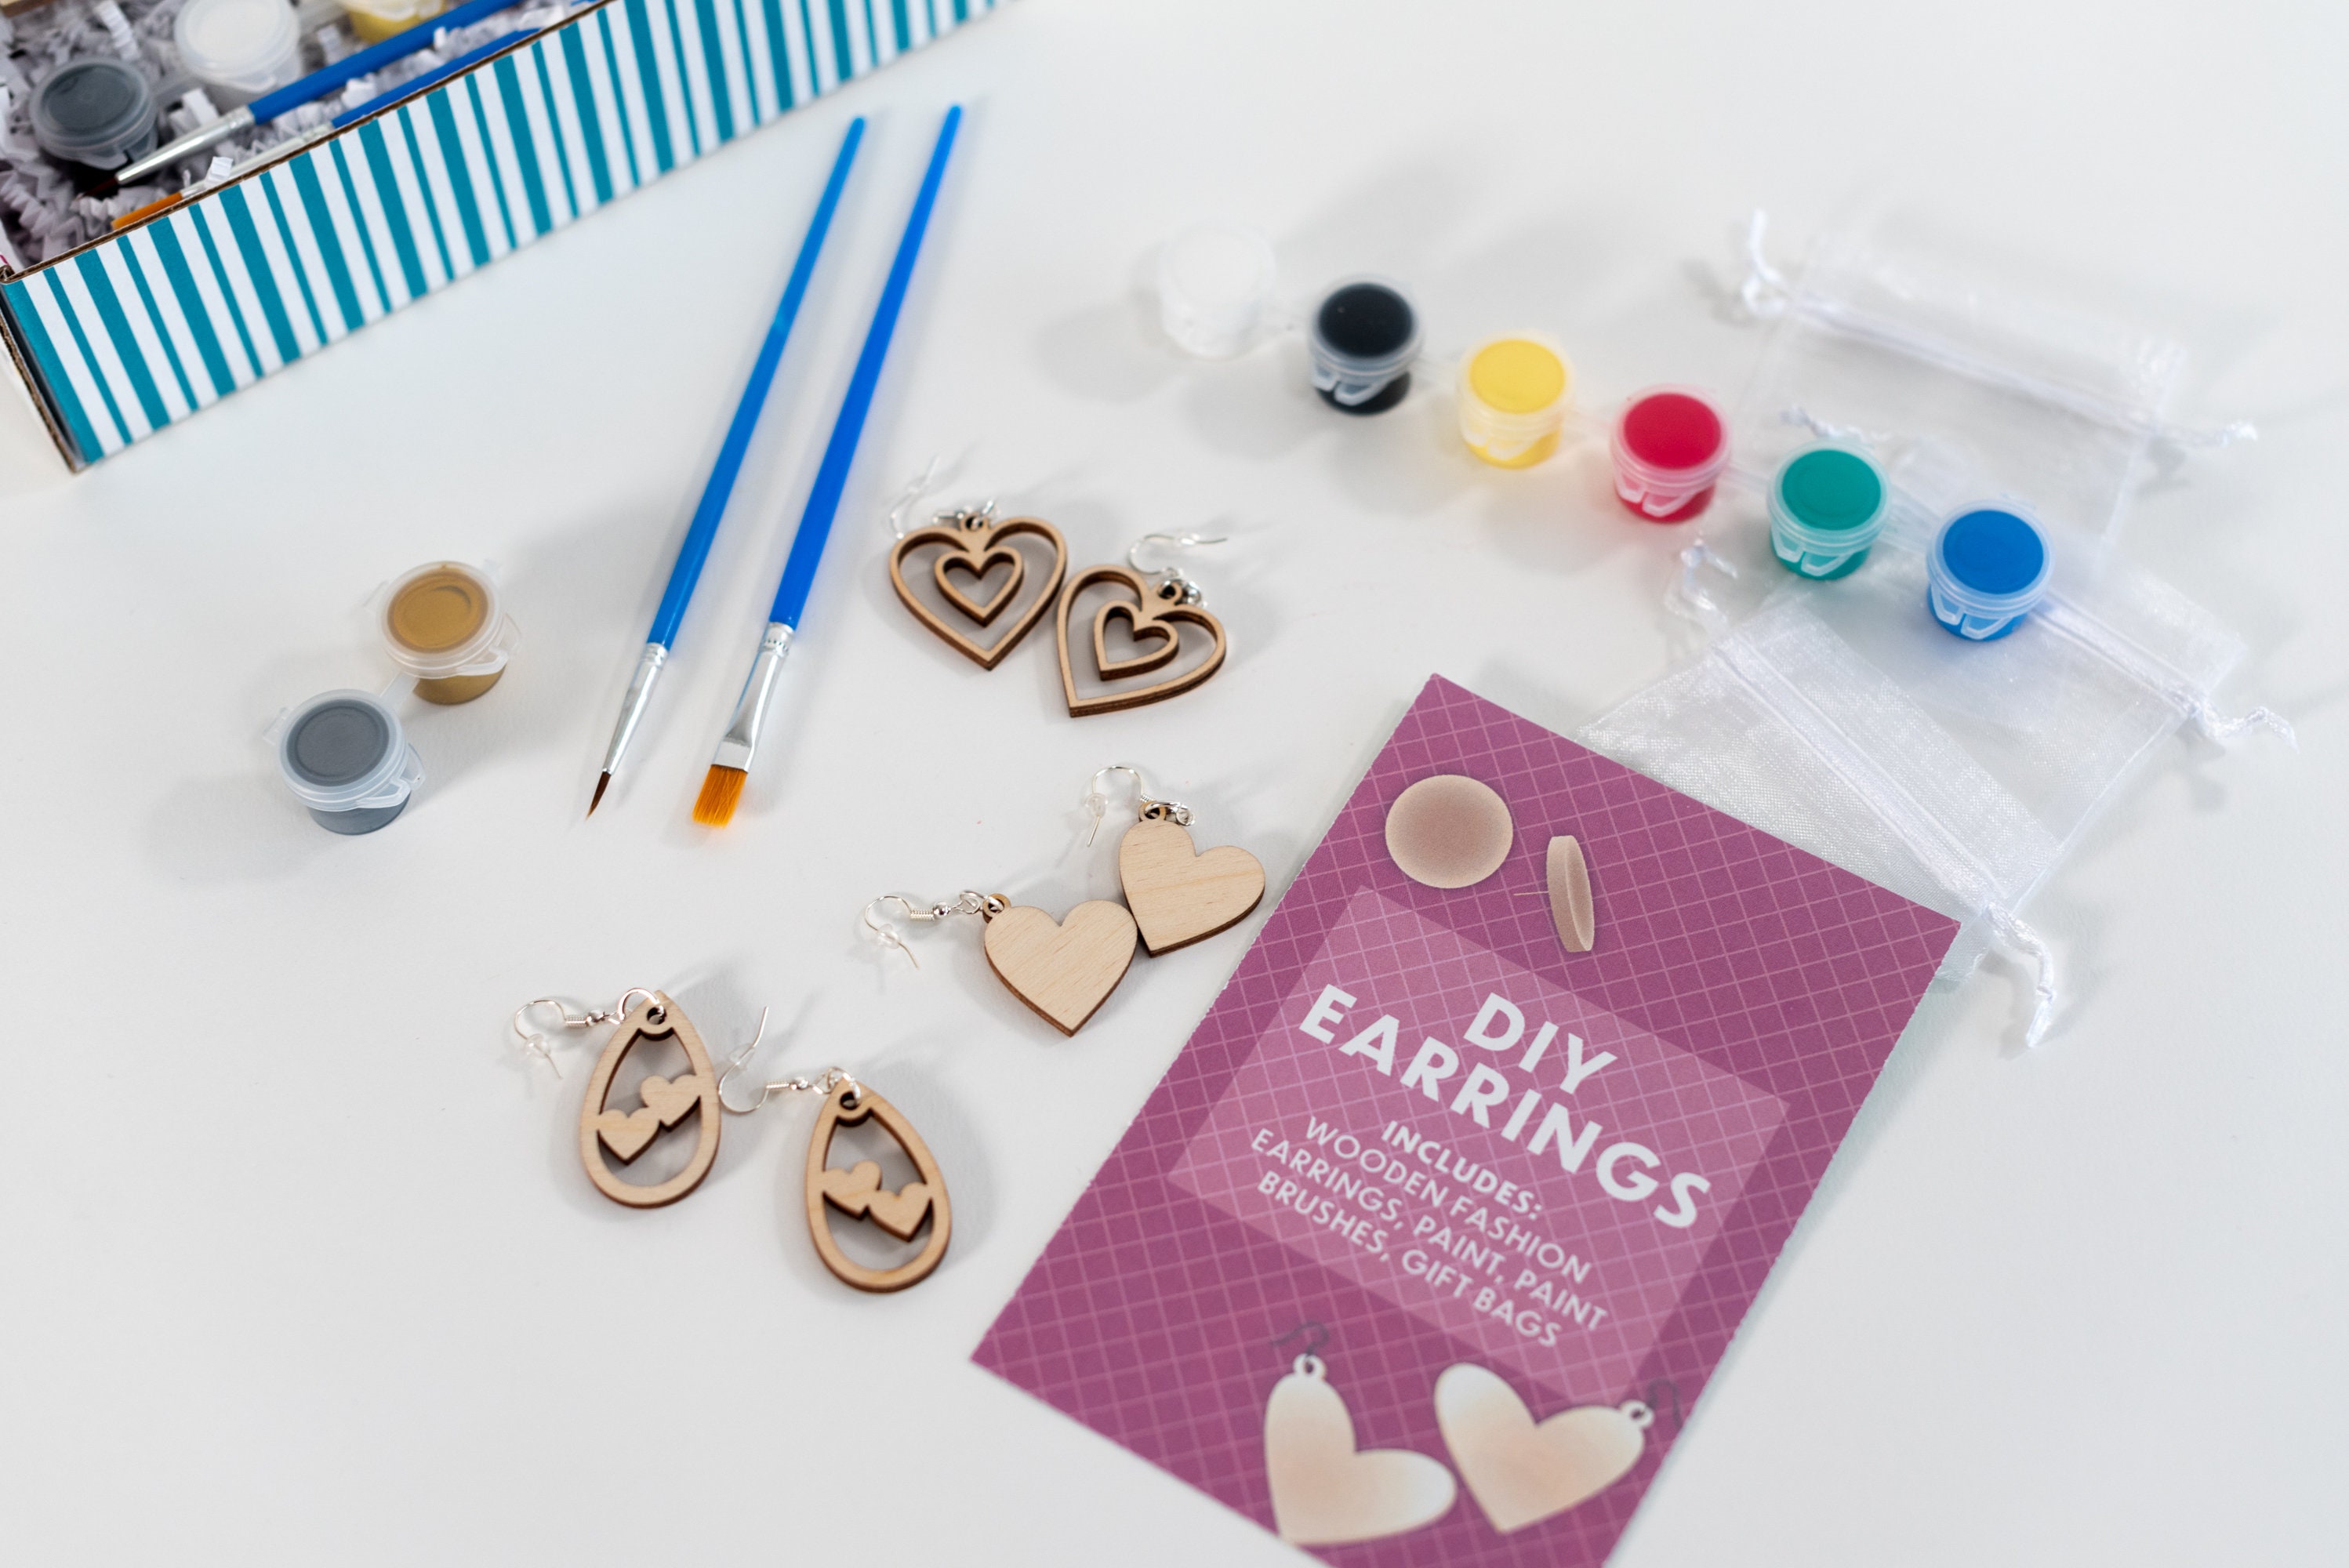 DIY Kit, DIY Jewelry Kit, Spring Craft, Statement Earrings